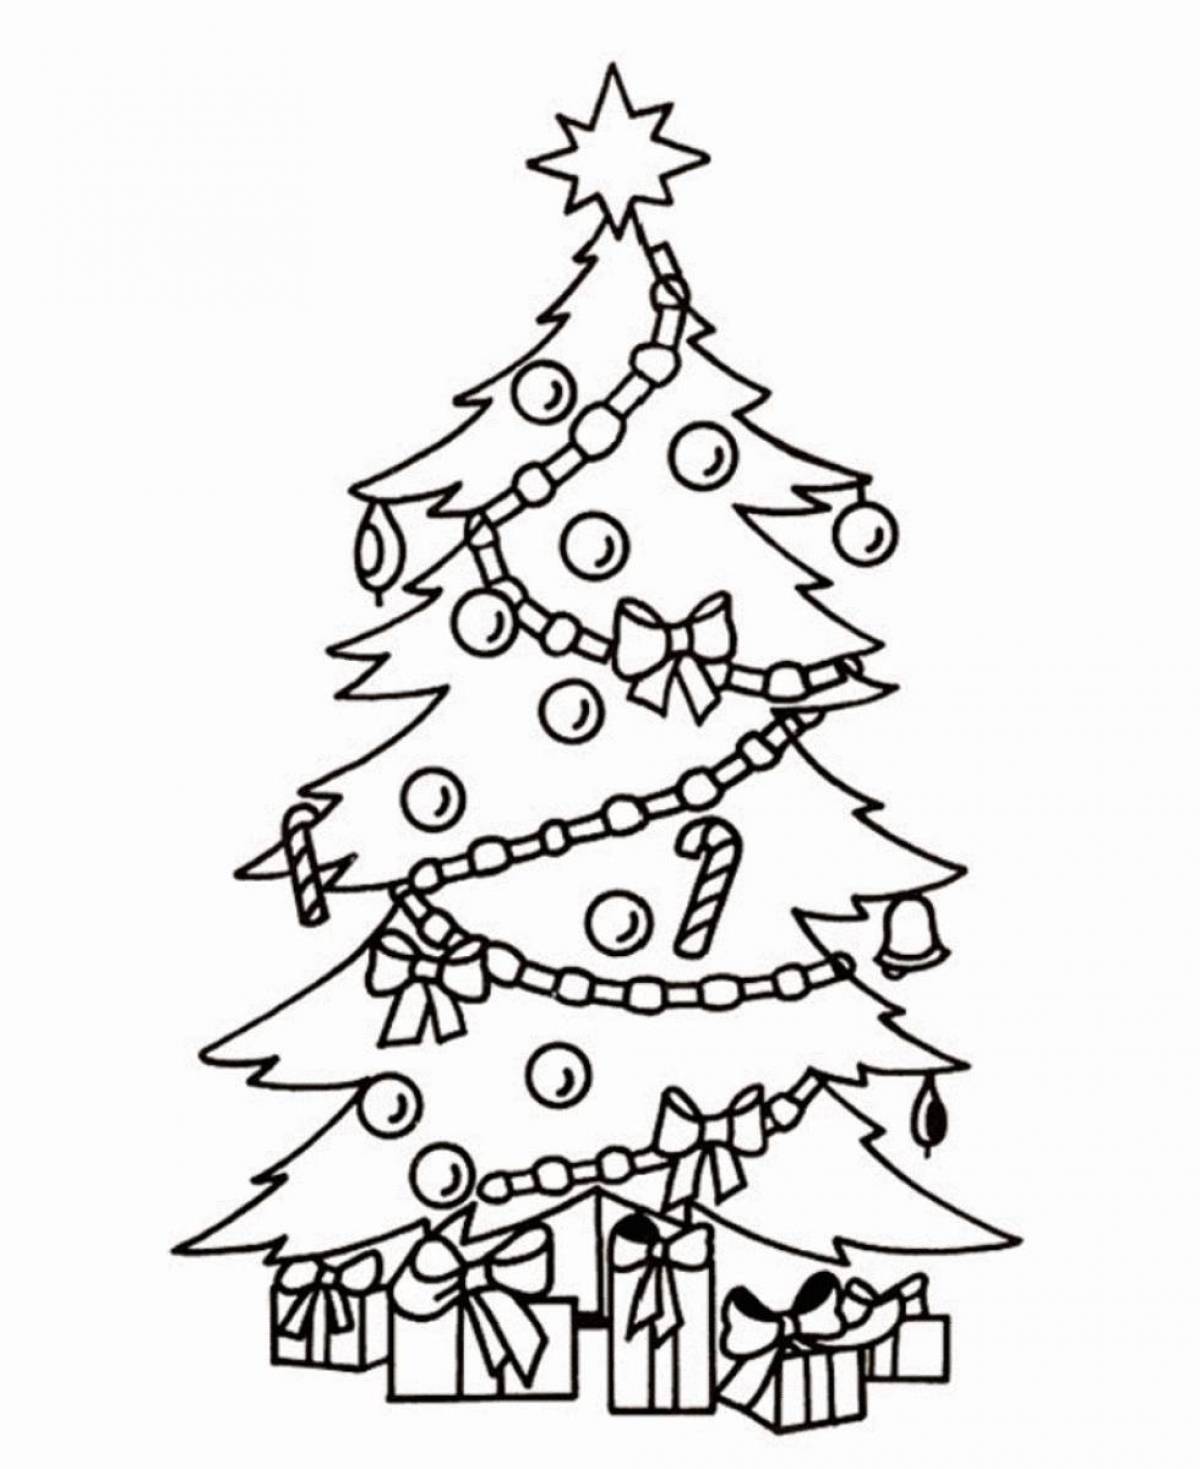 Christmas tree live coloring